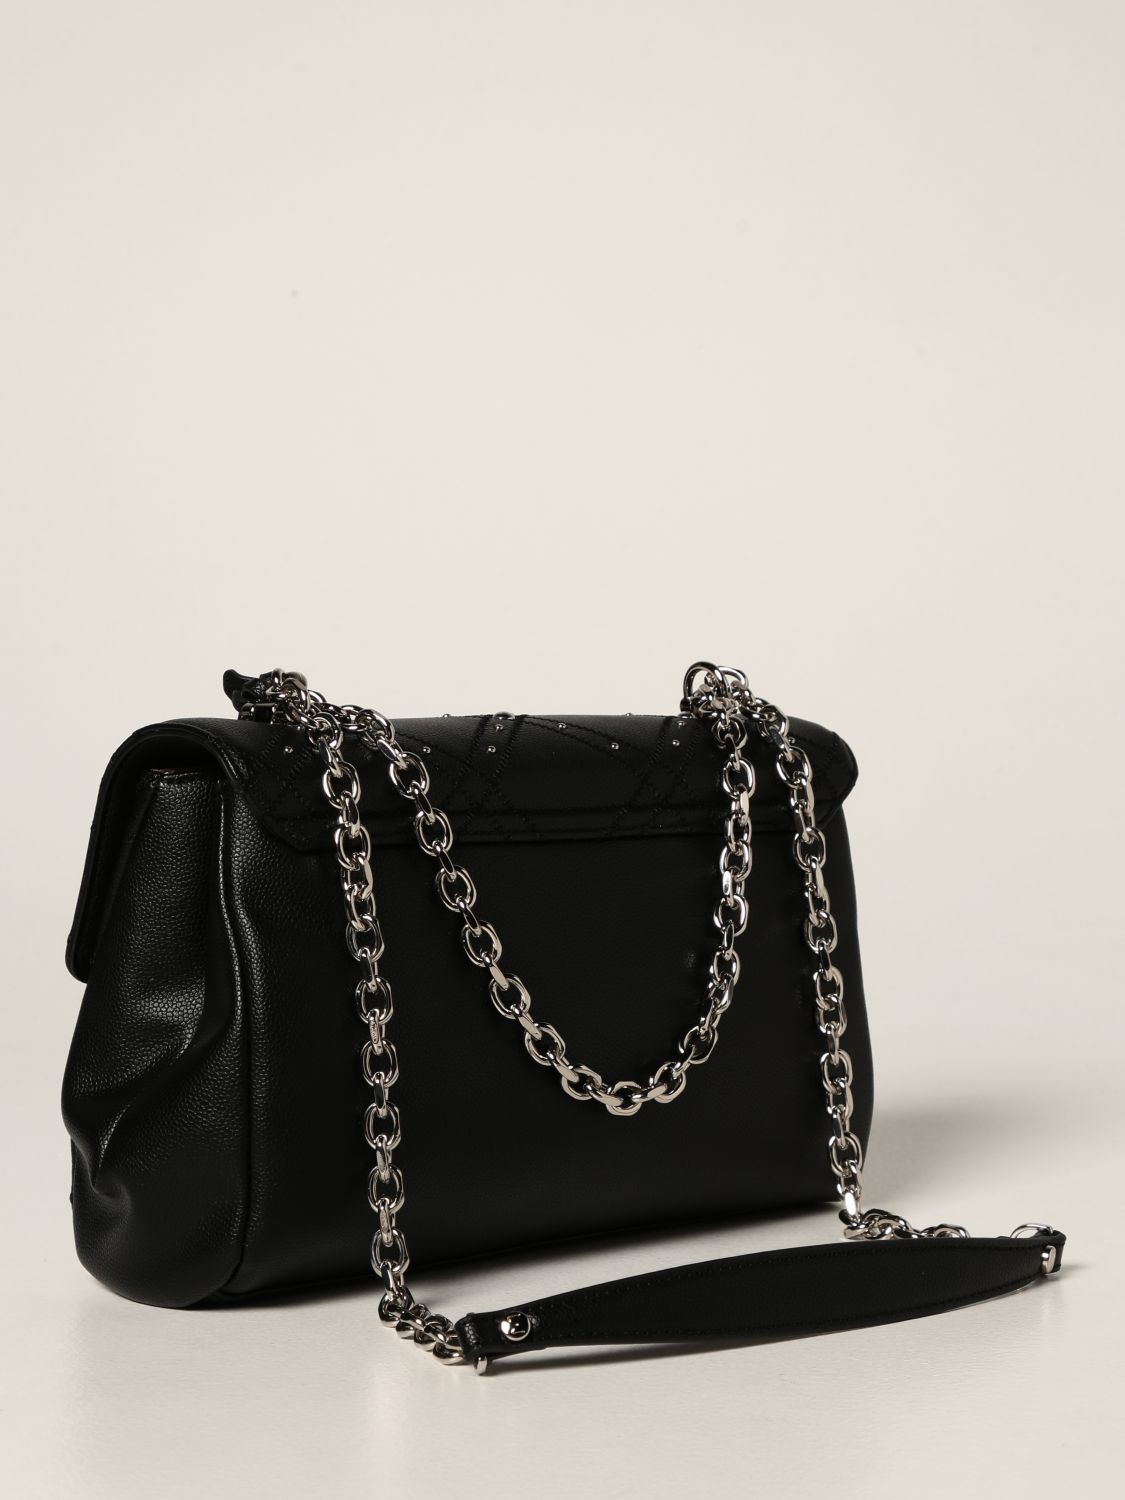 Site lijn Geen veeg LIU JO: bag in synthetic leather with studs - Black | Liu Jo crossbody bags  NF1092E0426 online on GIGLIO.COM